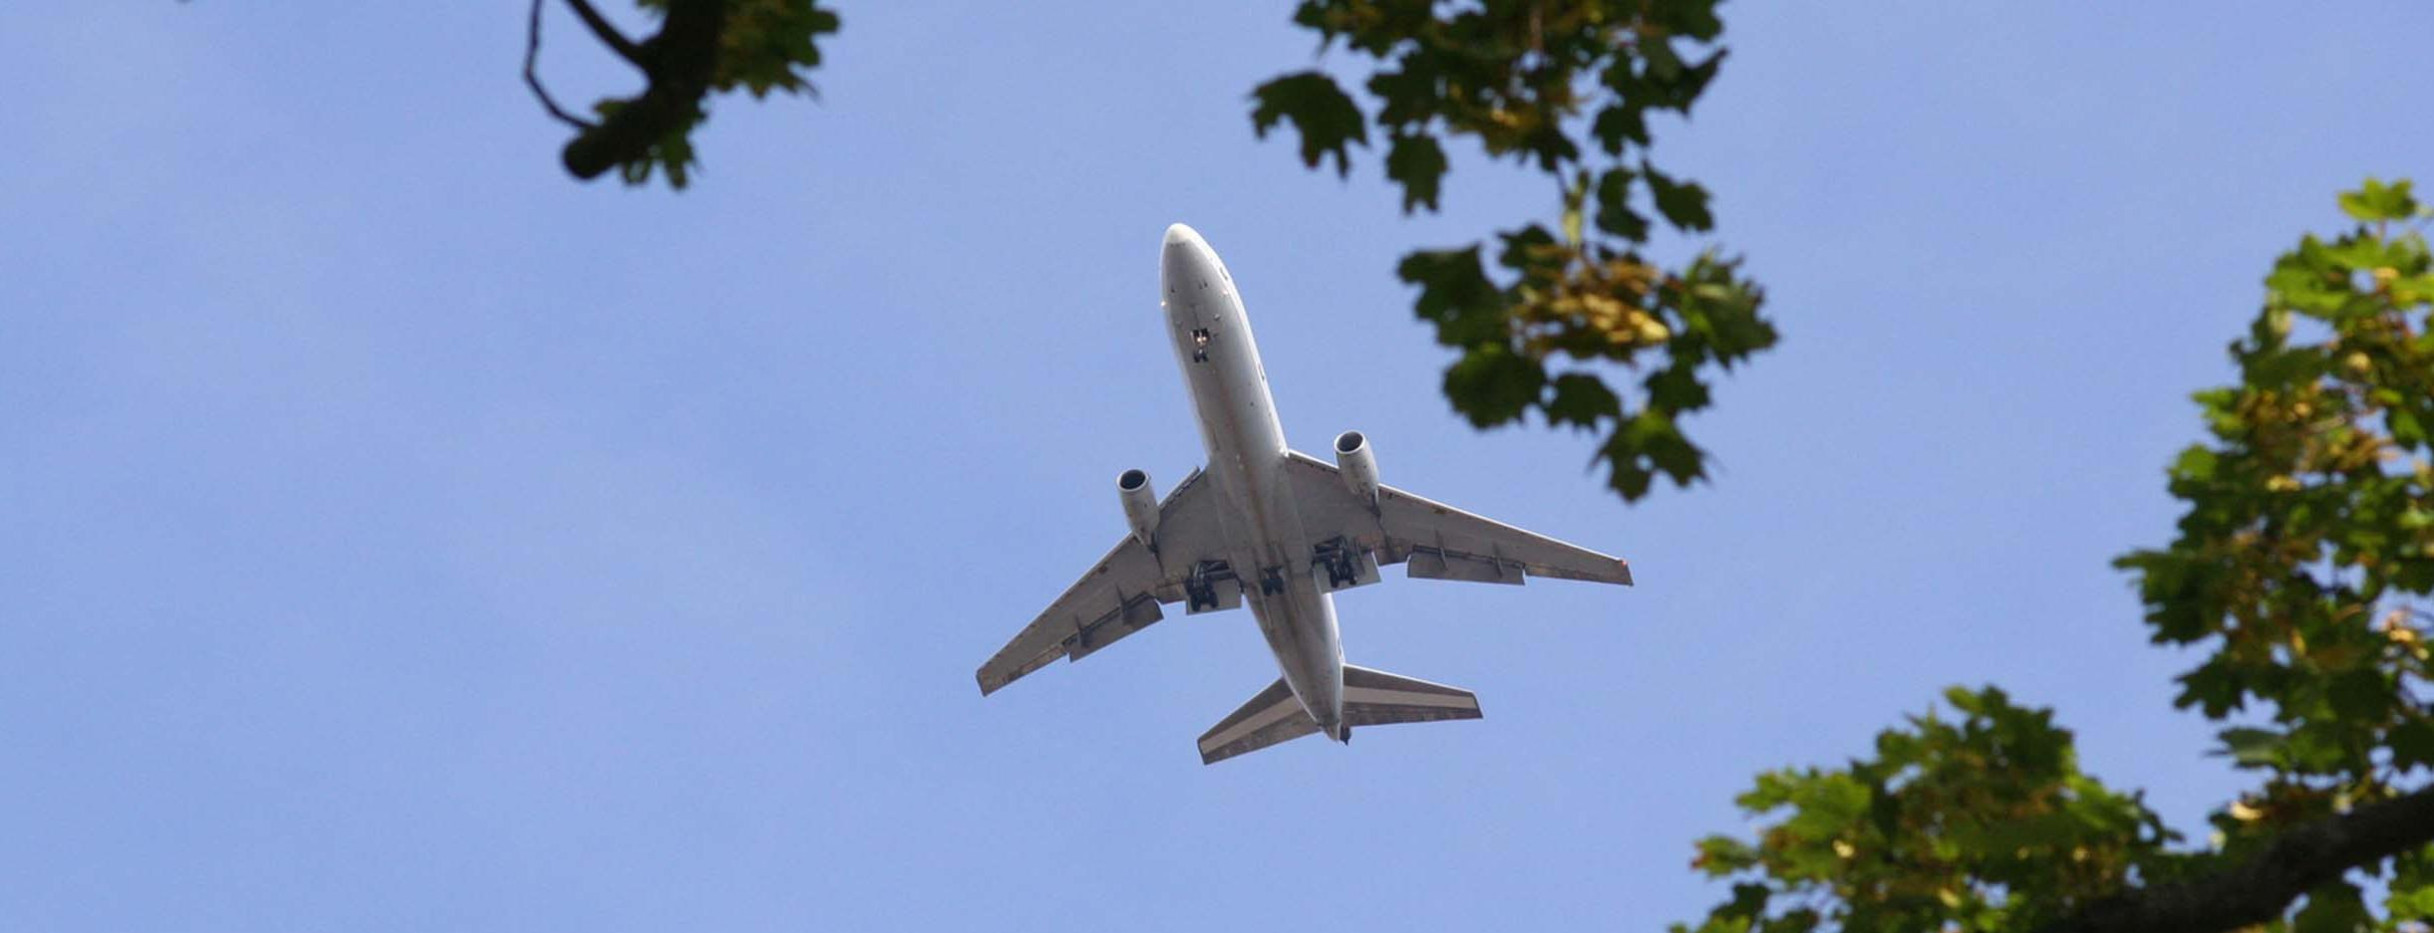 Flugzeug am Himmel (Bild: Fotolia/ lansc)